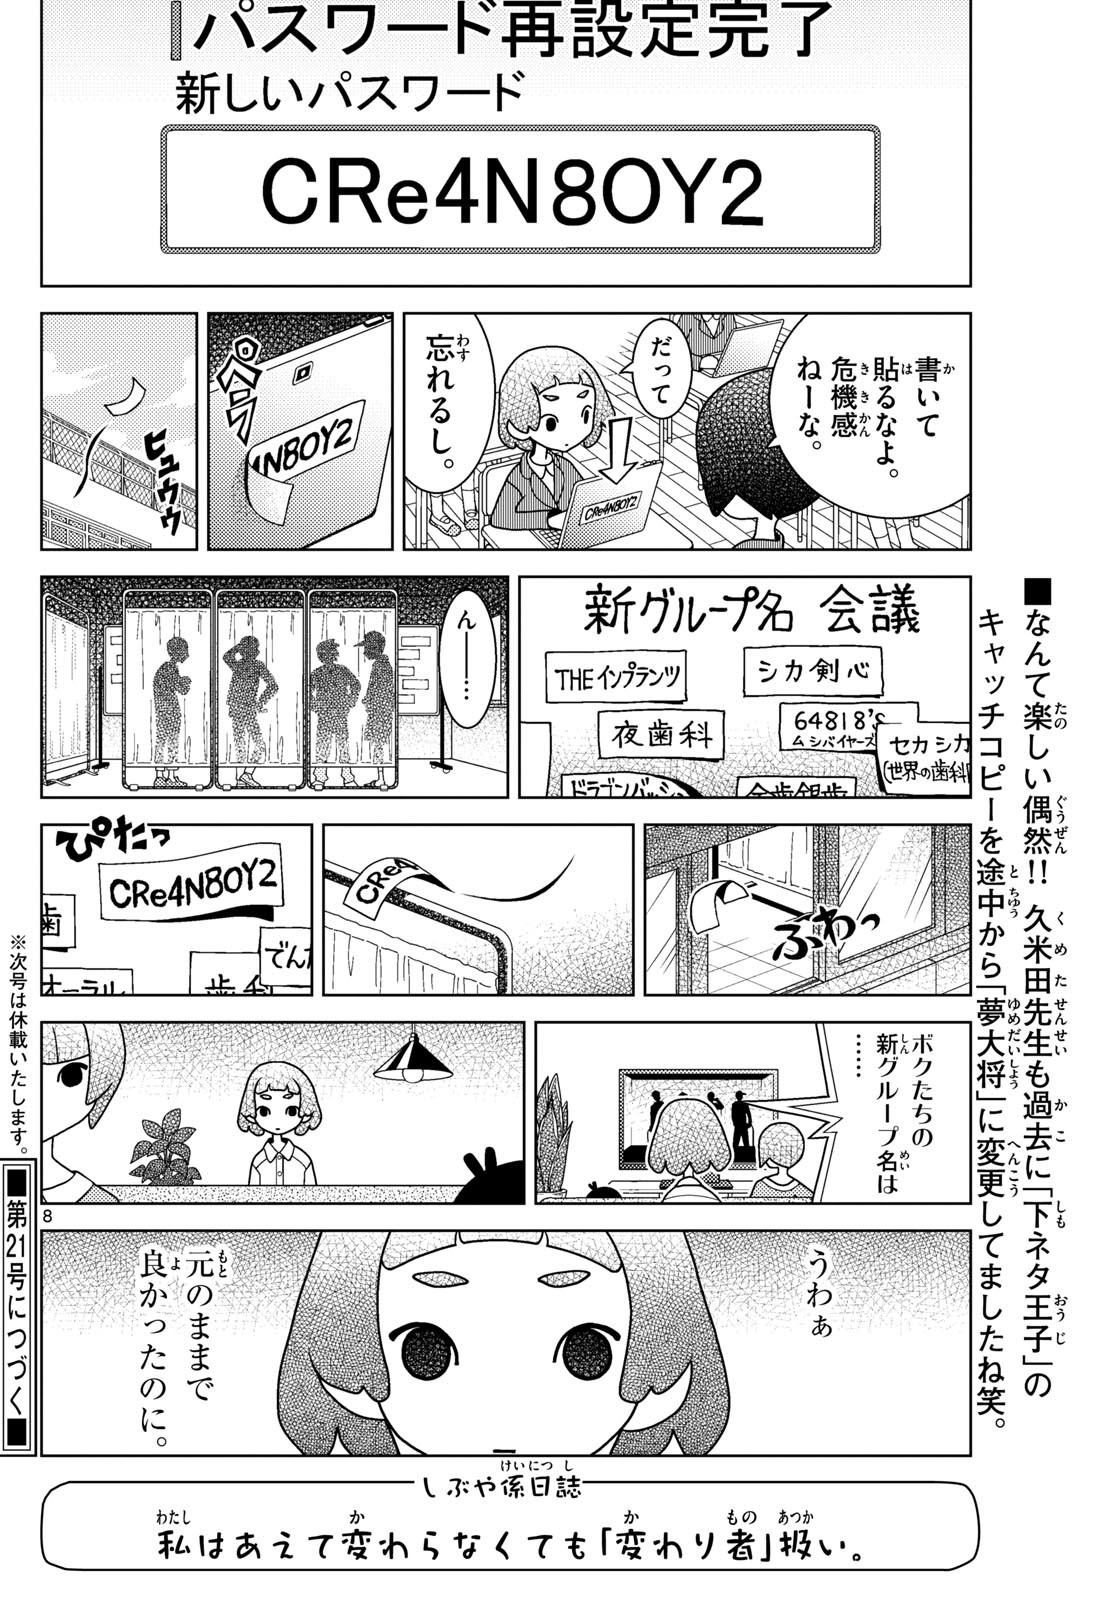 Shibuya Near Family - Chapter 091 - Page 8